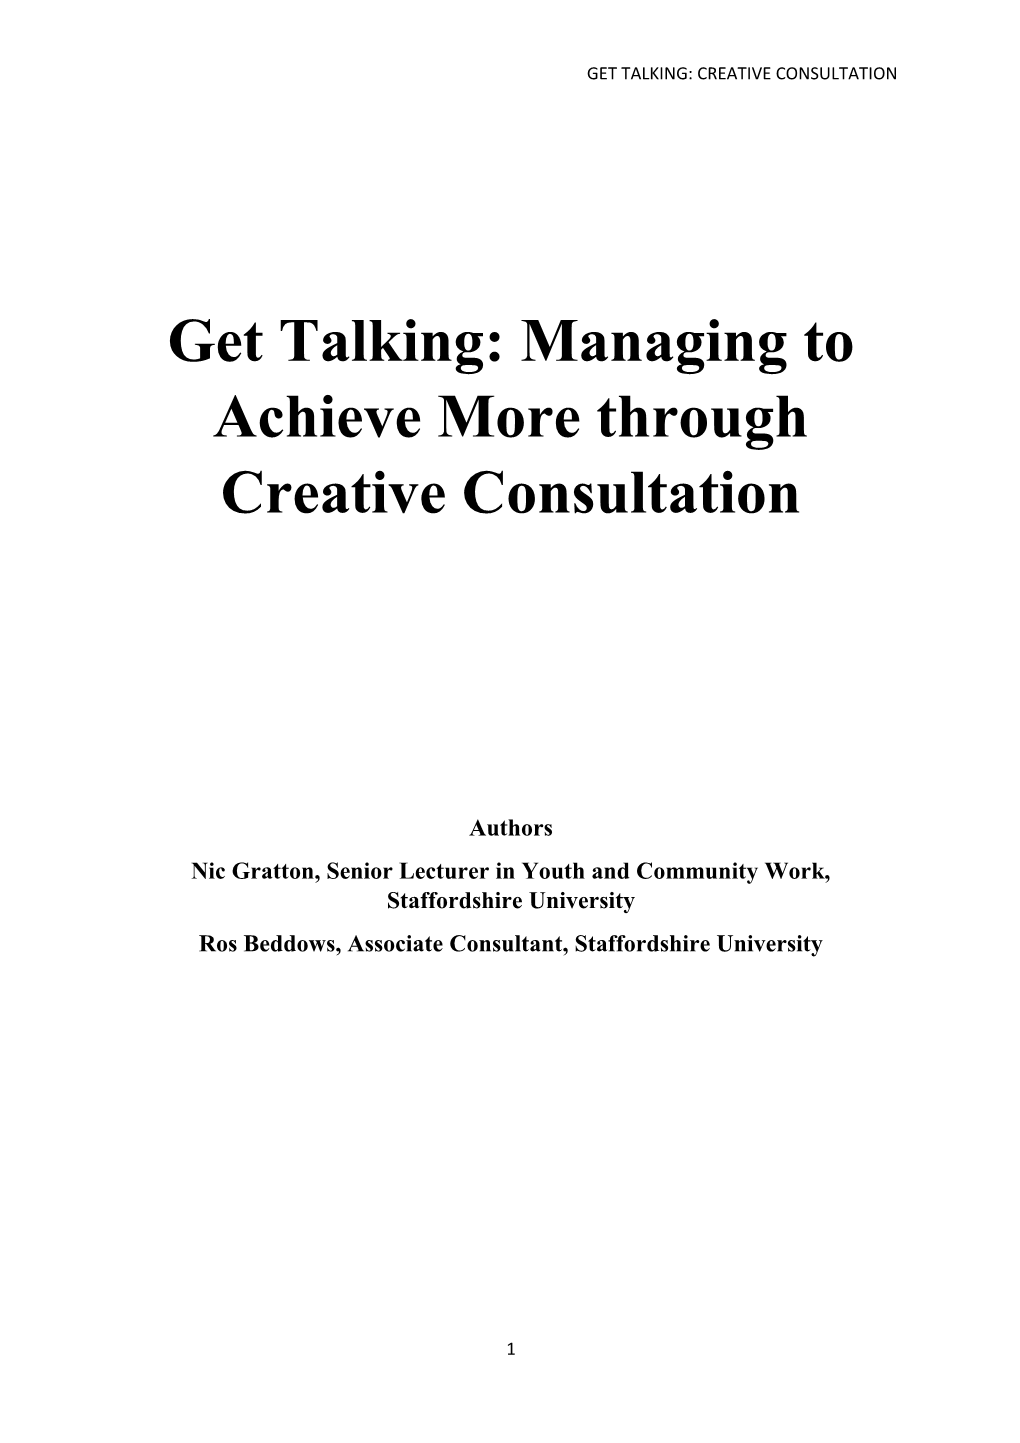 Get Talking: Managing to Achieve More Through Creative Consultation